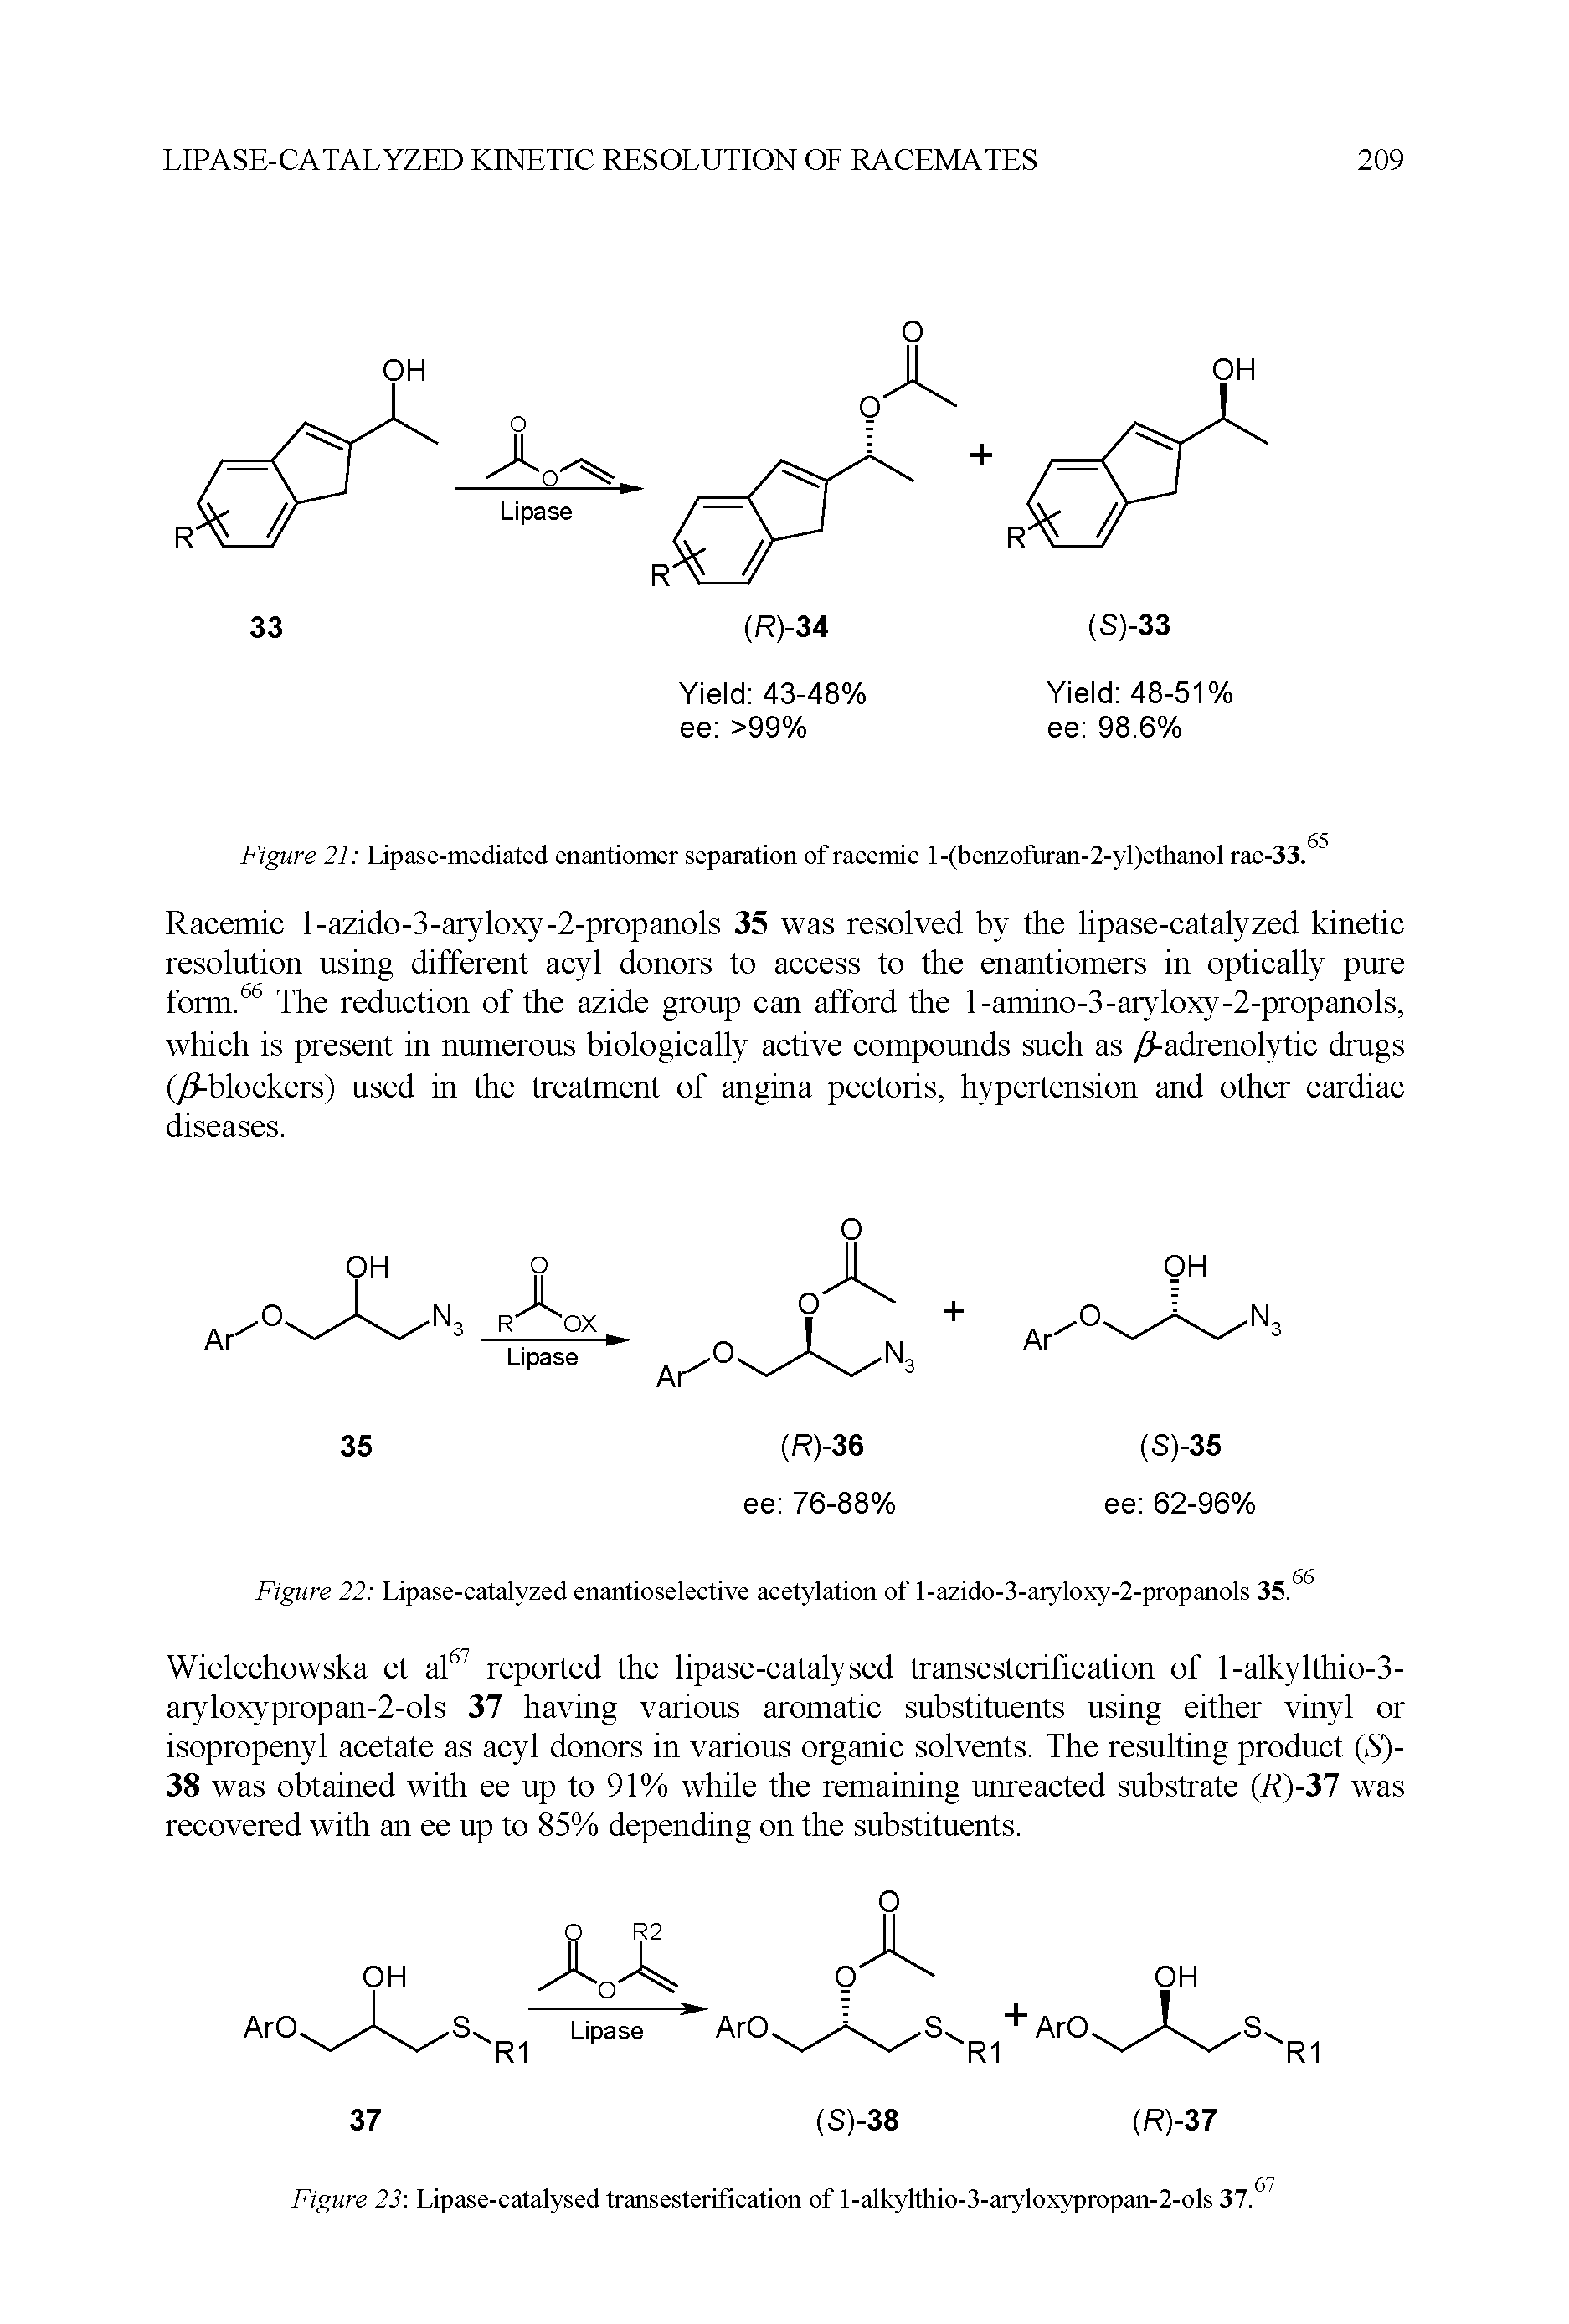 Figure 22 Lipase-catalyzed enantioselective acetylation of l-azido-3-aryloxy-2-propanols 35.